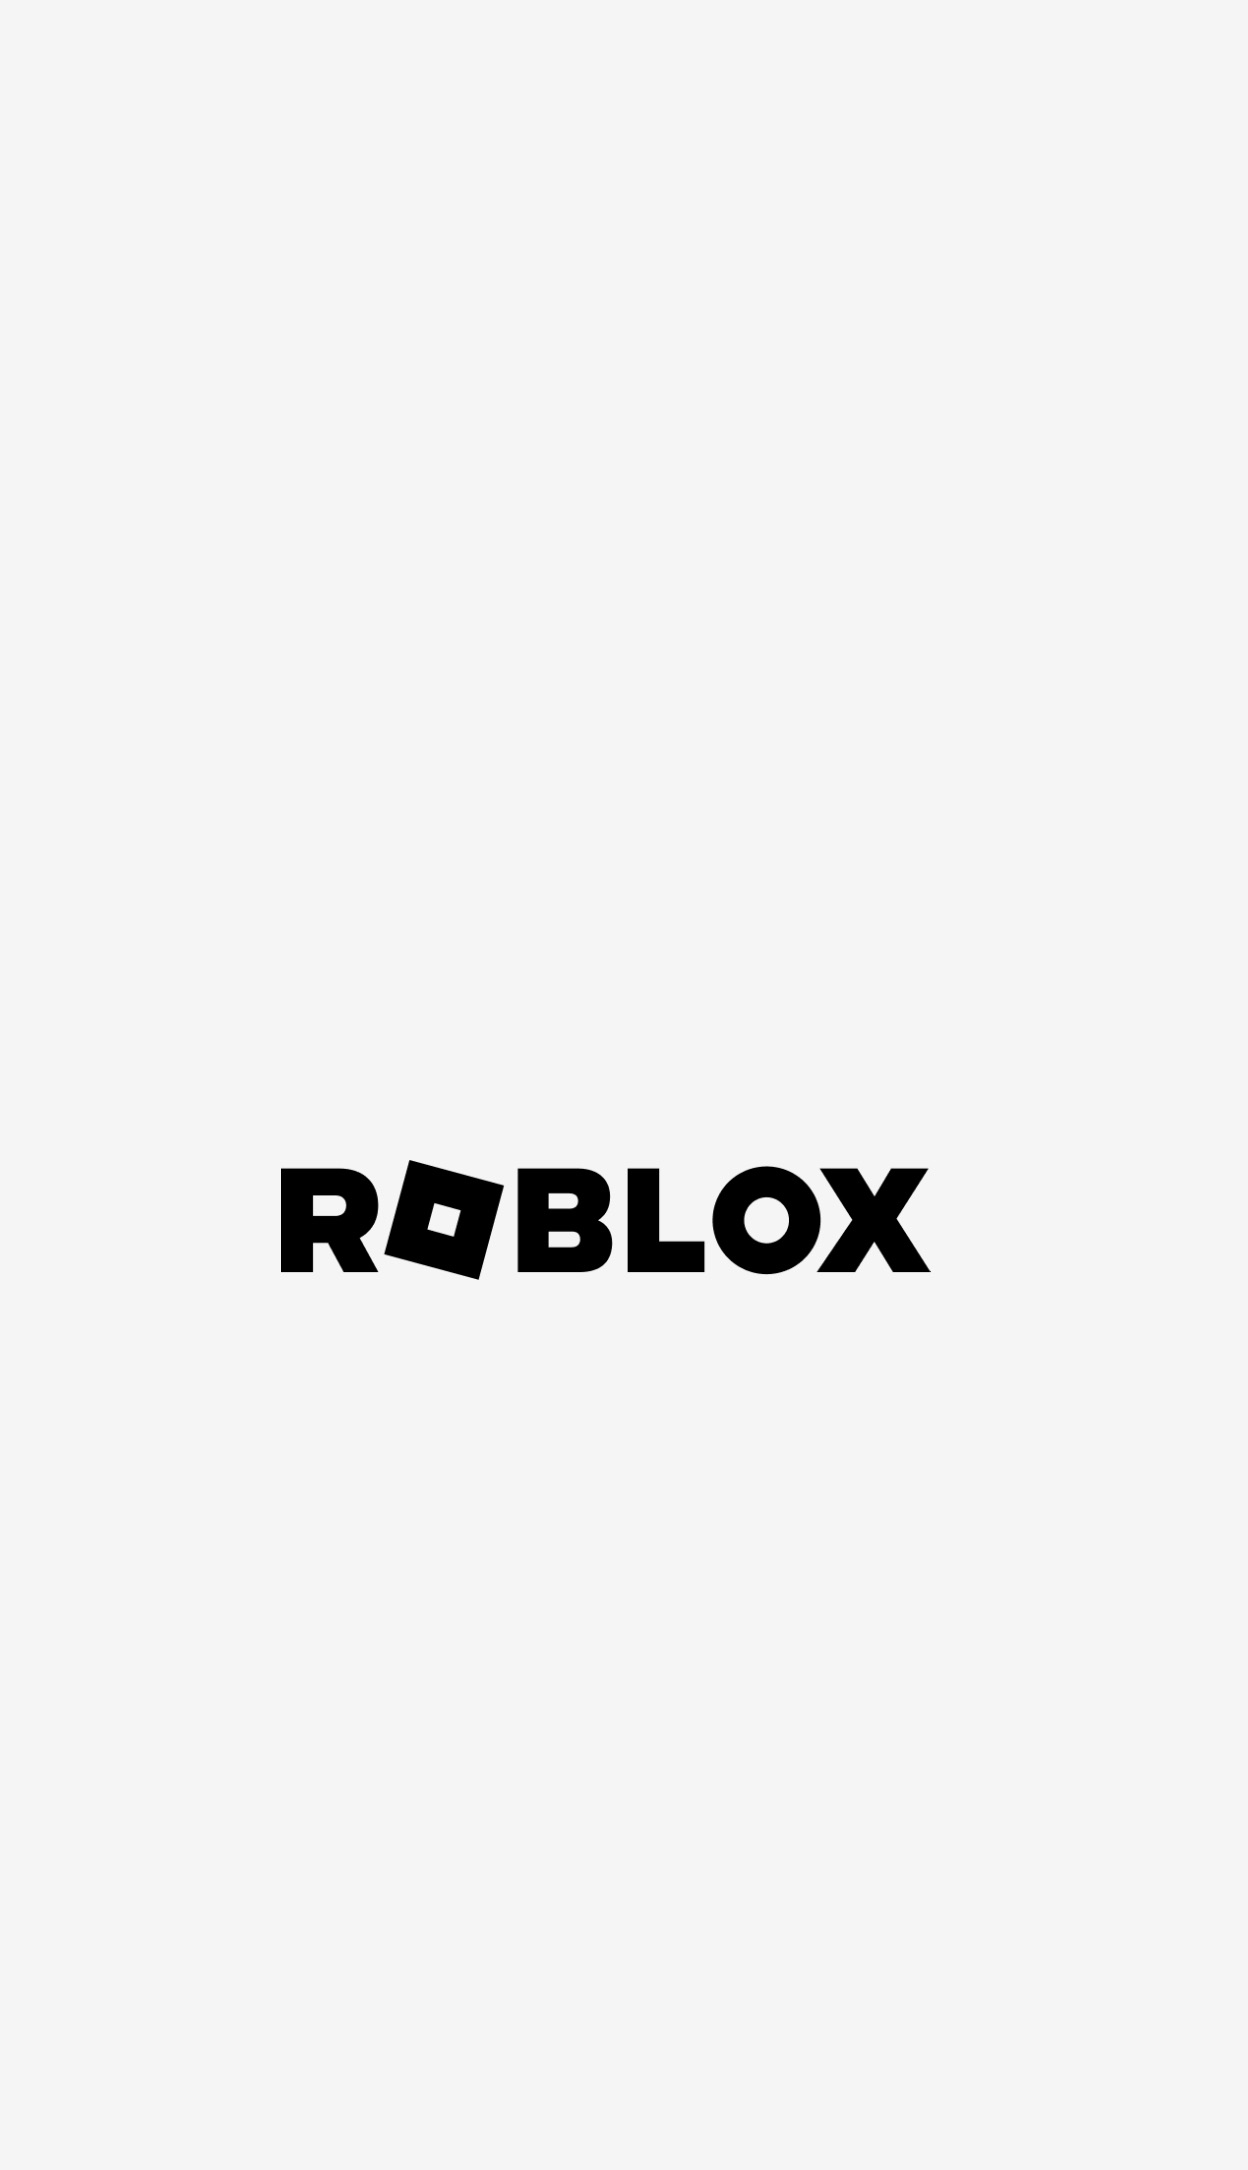 Roblox logo page